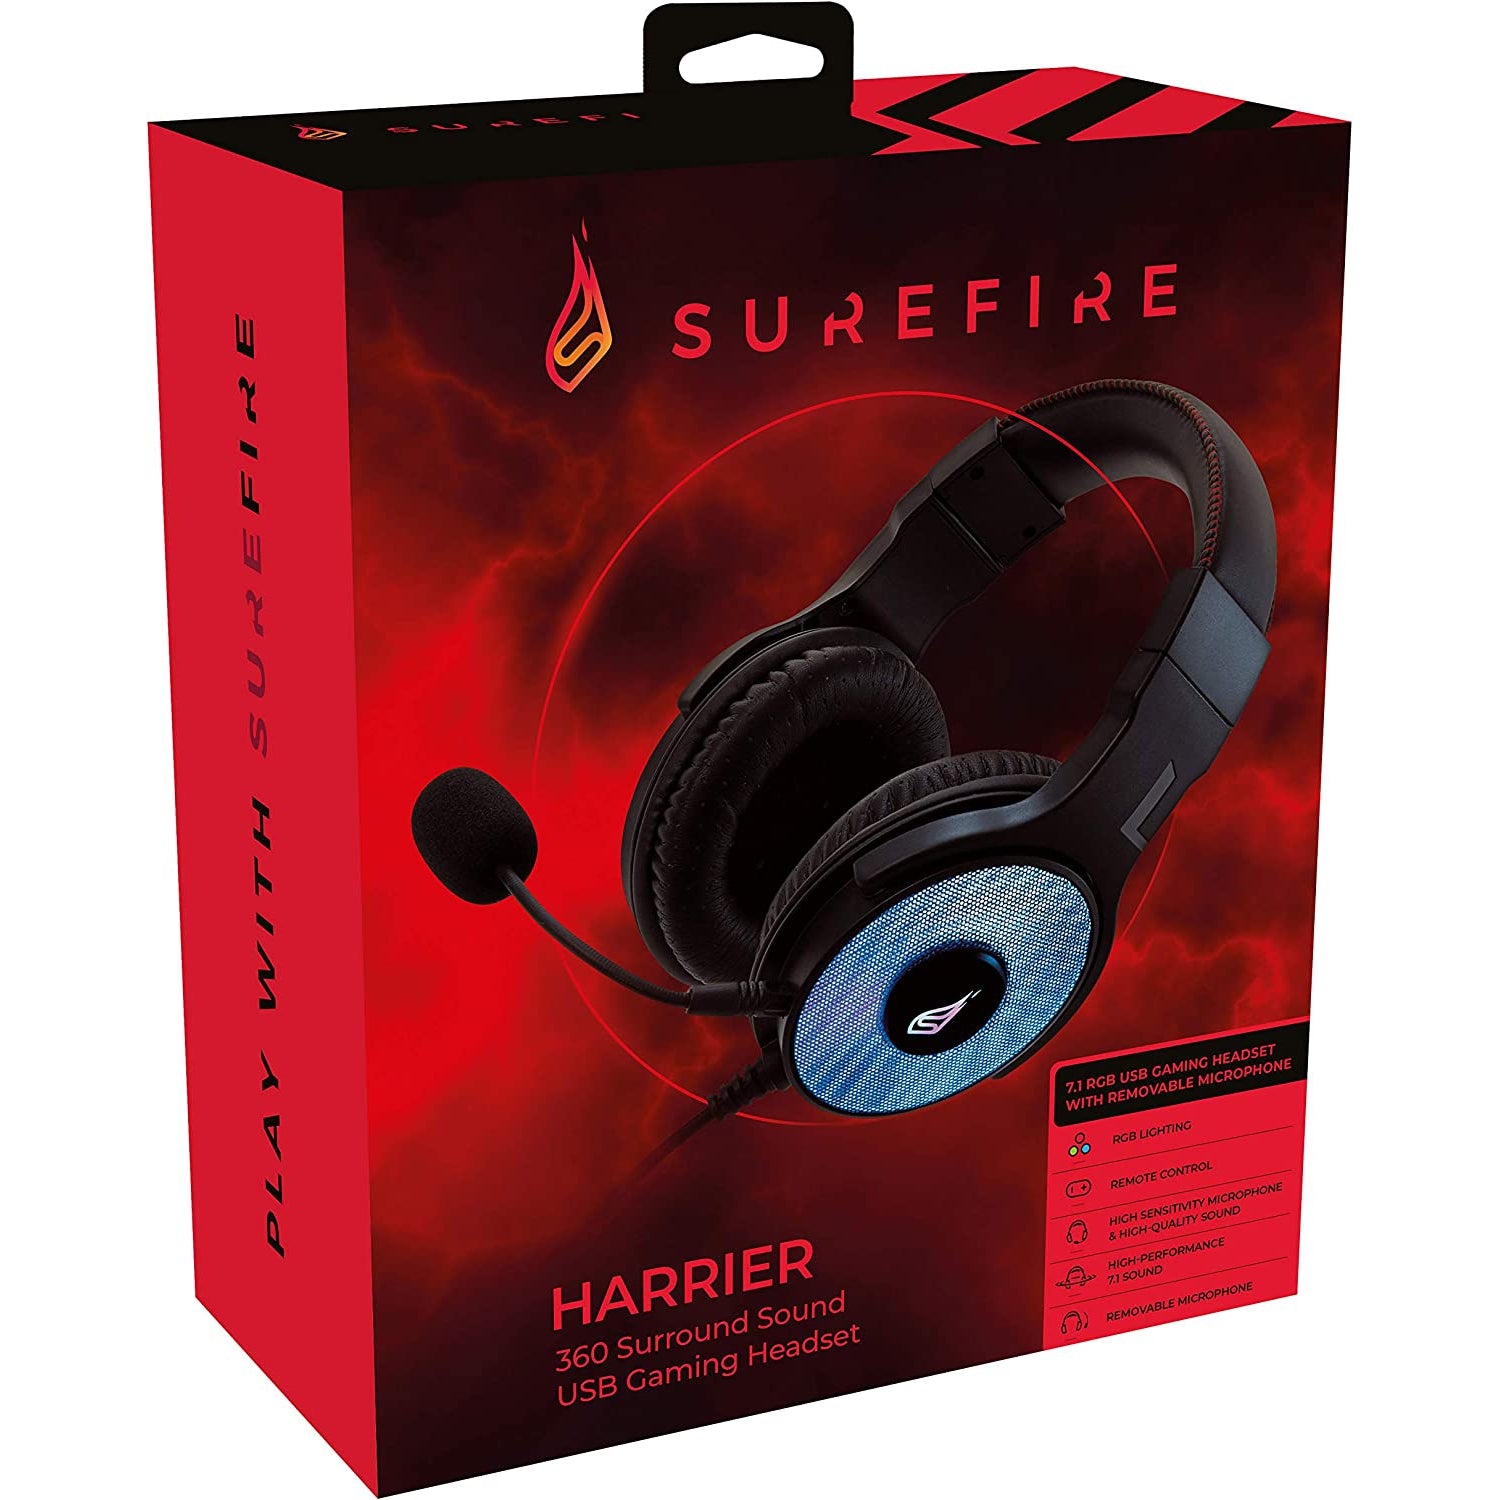 Surefire Harrier 360 Surround Sound USB Gaming Headset - Black / RGB